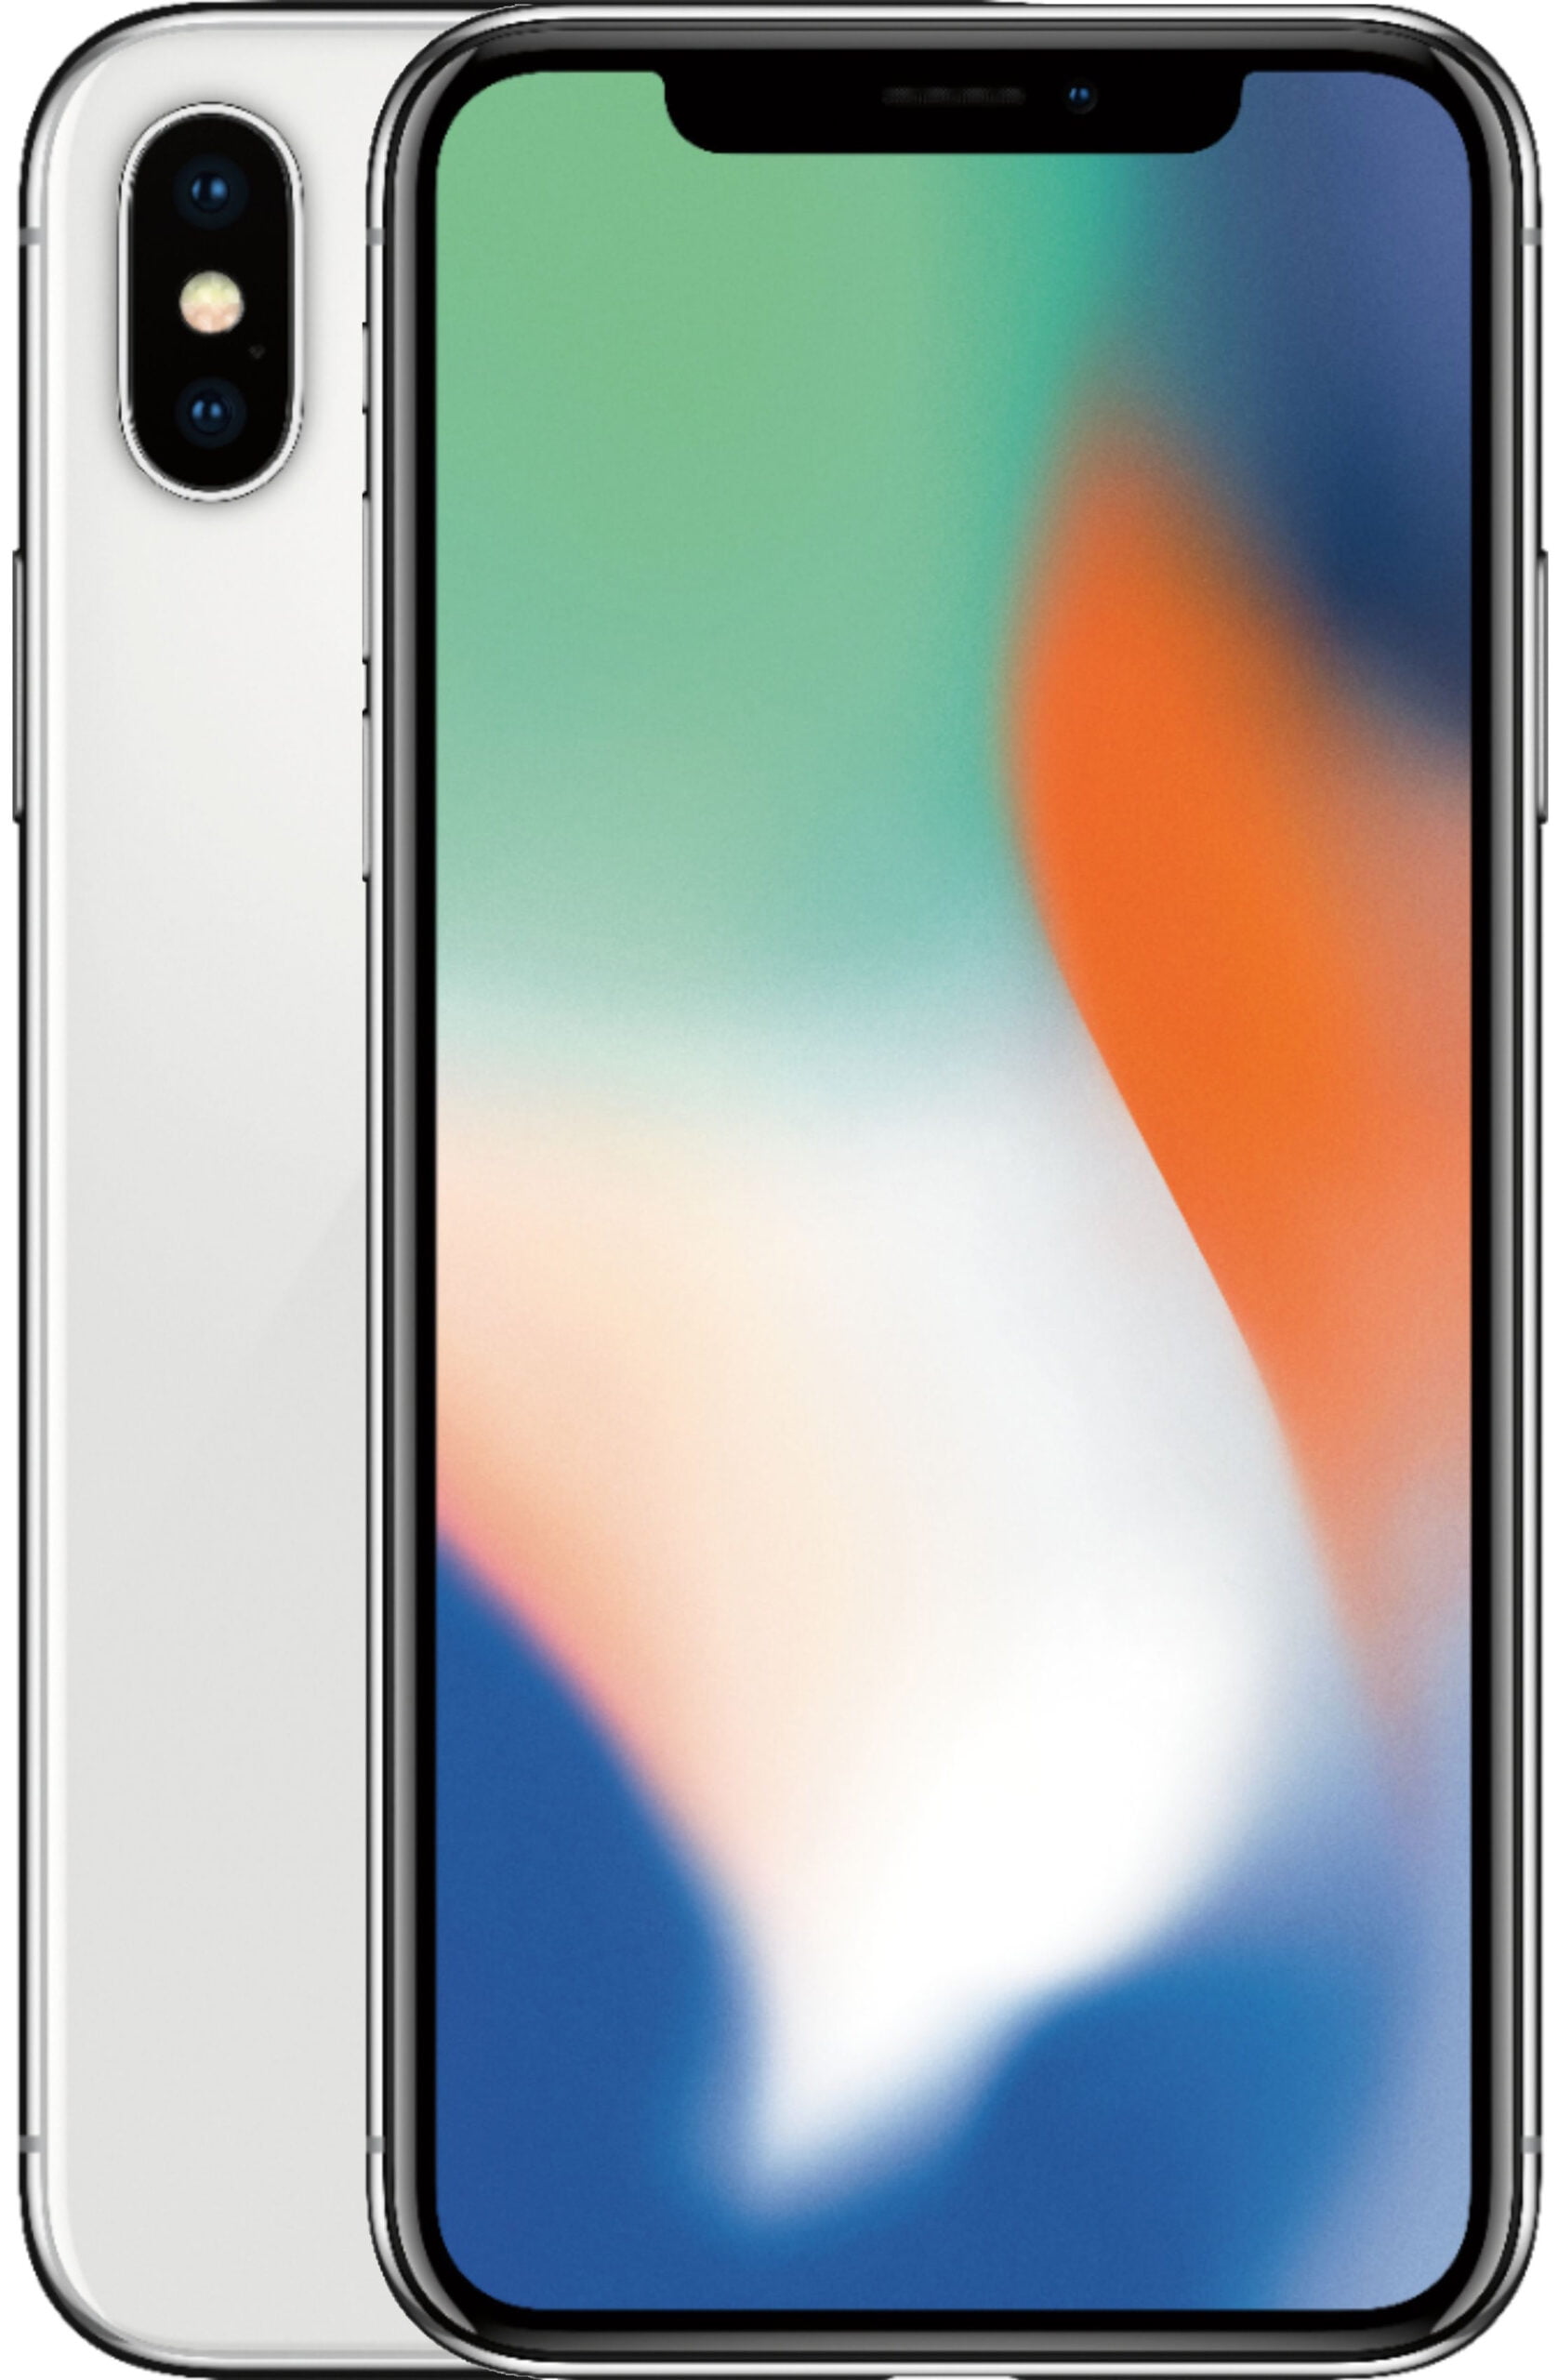 Apple iPhone X 64GB Unlocked GSM Phone w/ Dual 12MP Camera - Space Gray - B  Grade Used - Walmart.com